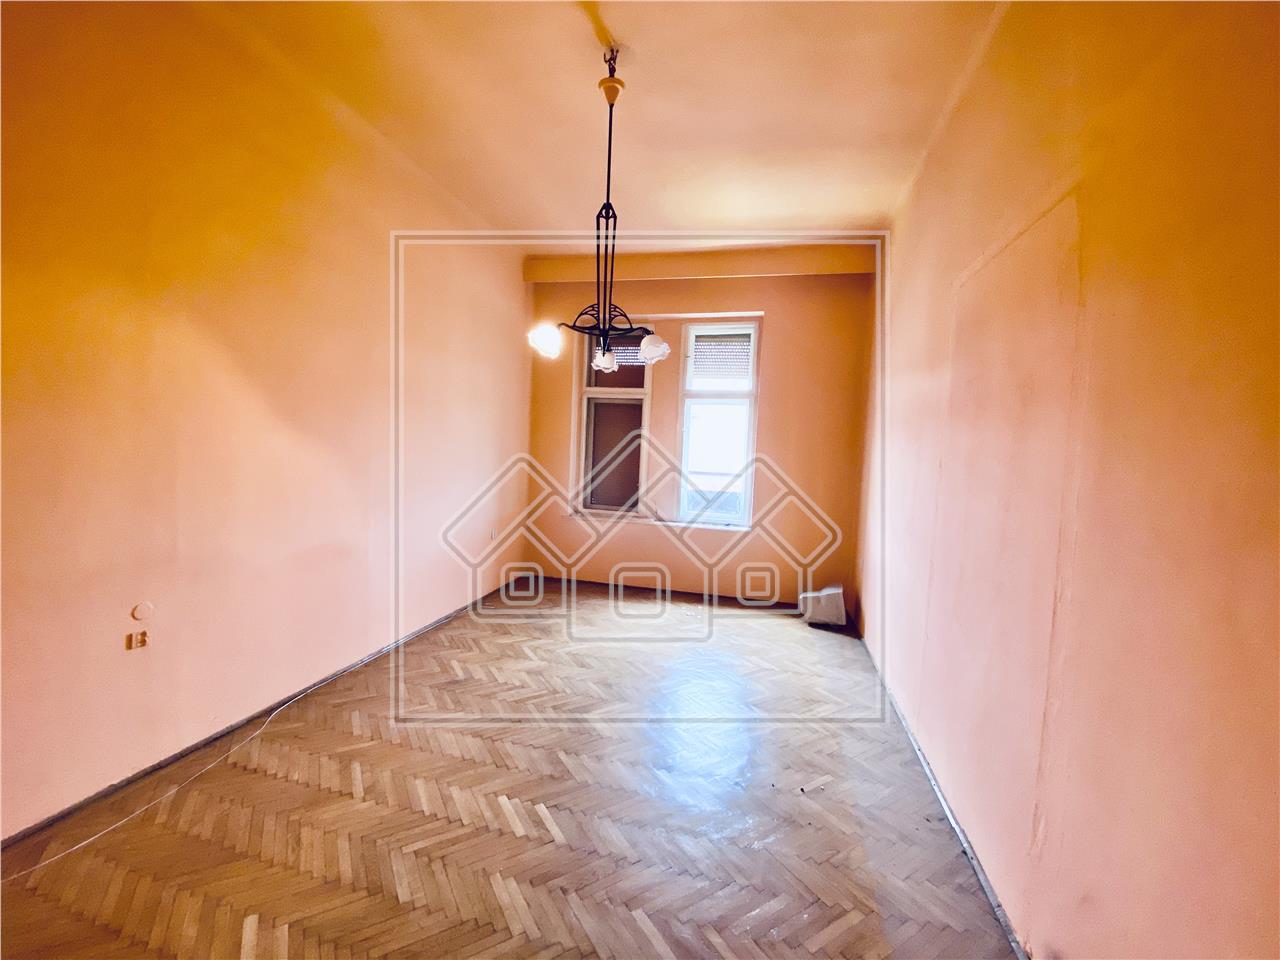 Apartment for sale in Sibiu - ULTRACENTRALA area